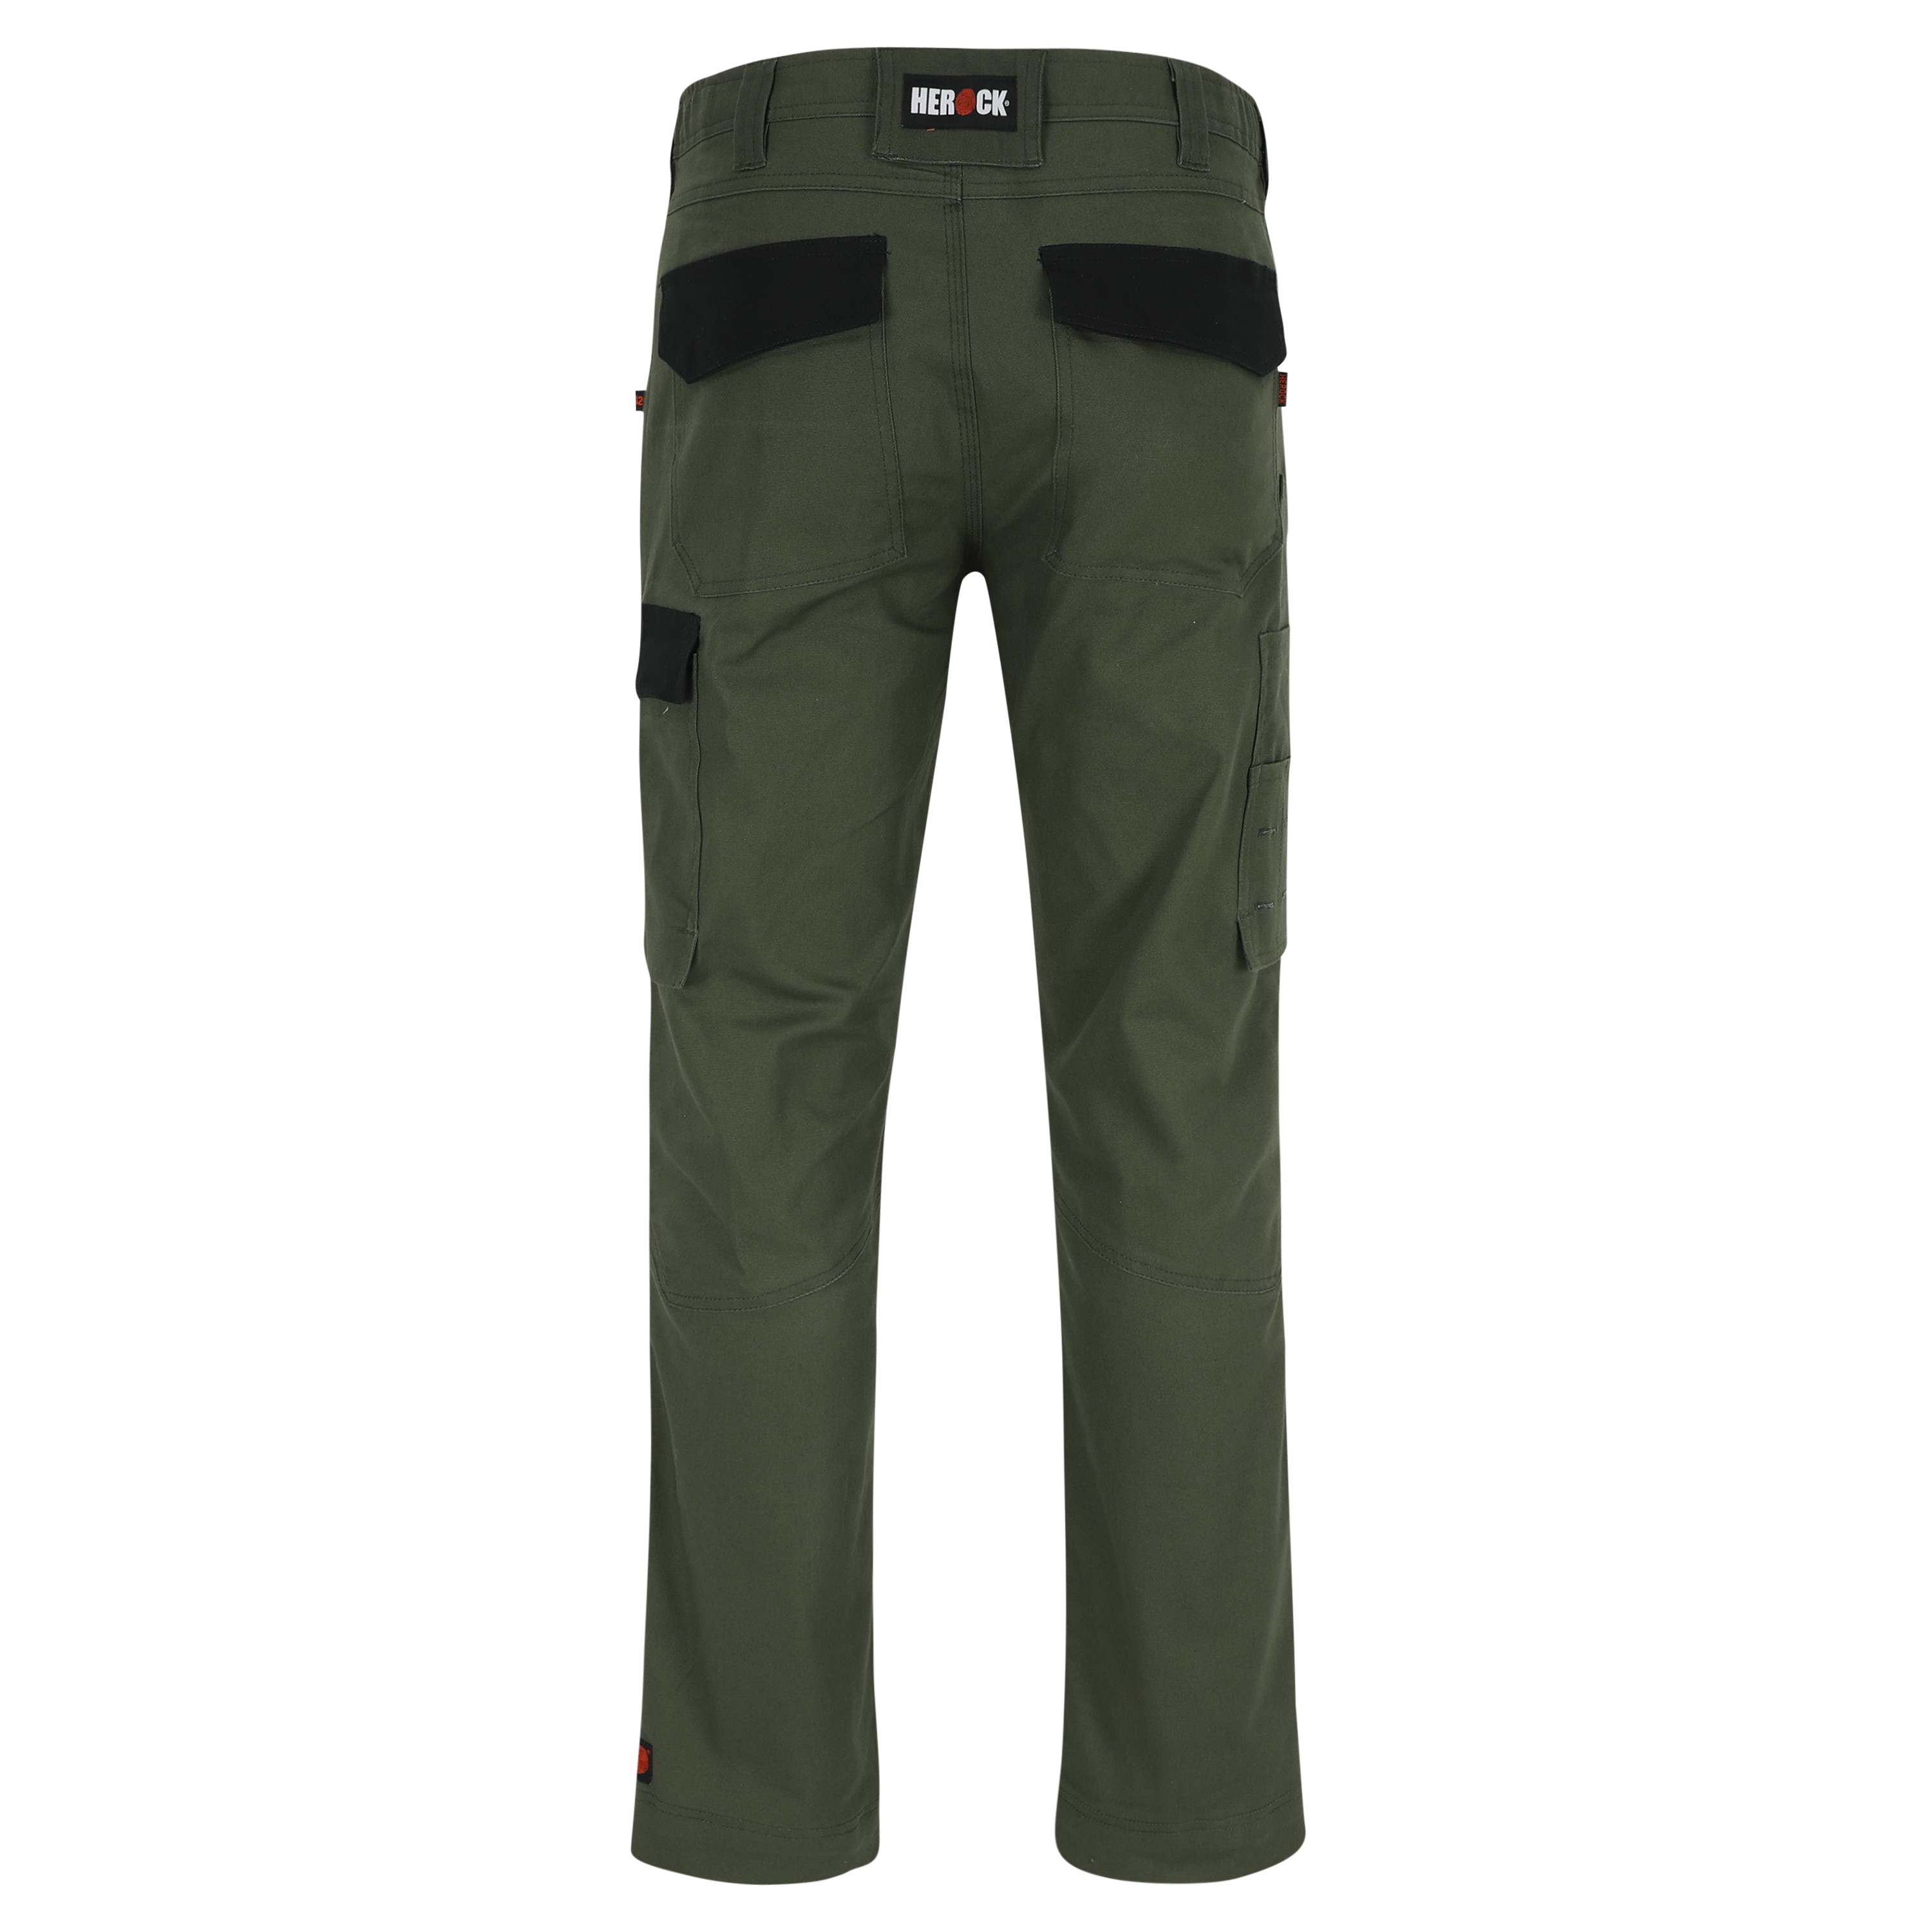 Pantalon travail extensible poches genoux Dero Herock vert vue 3 cotepro.fr